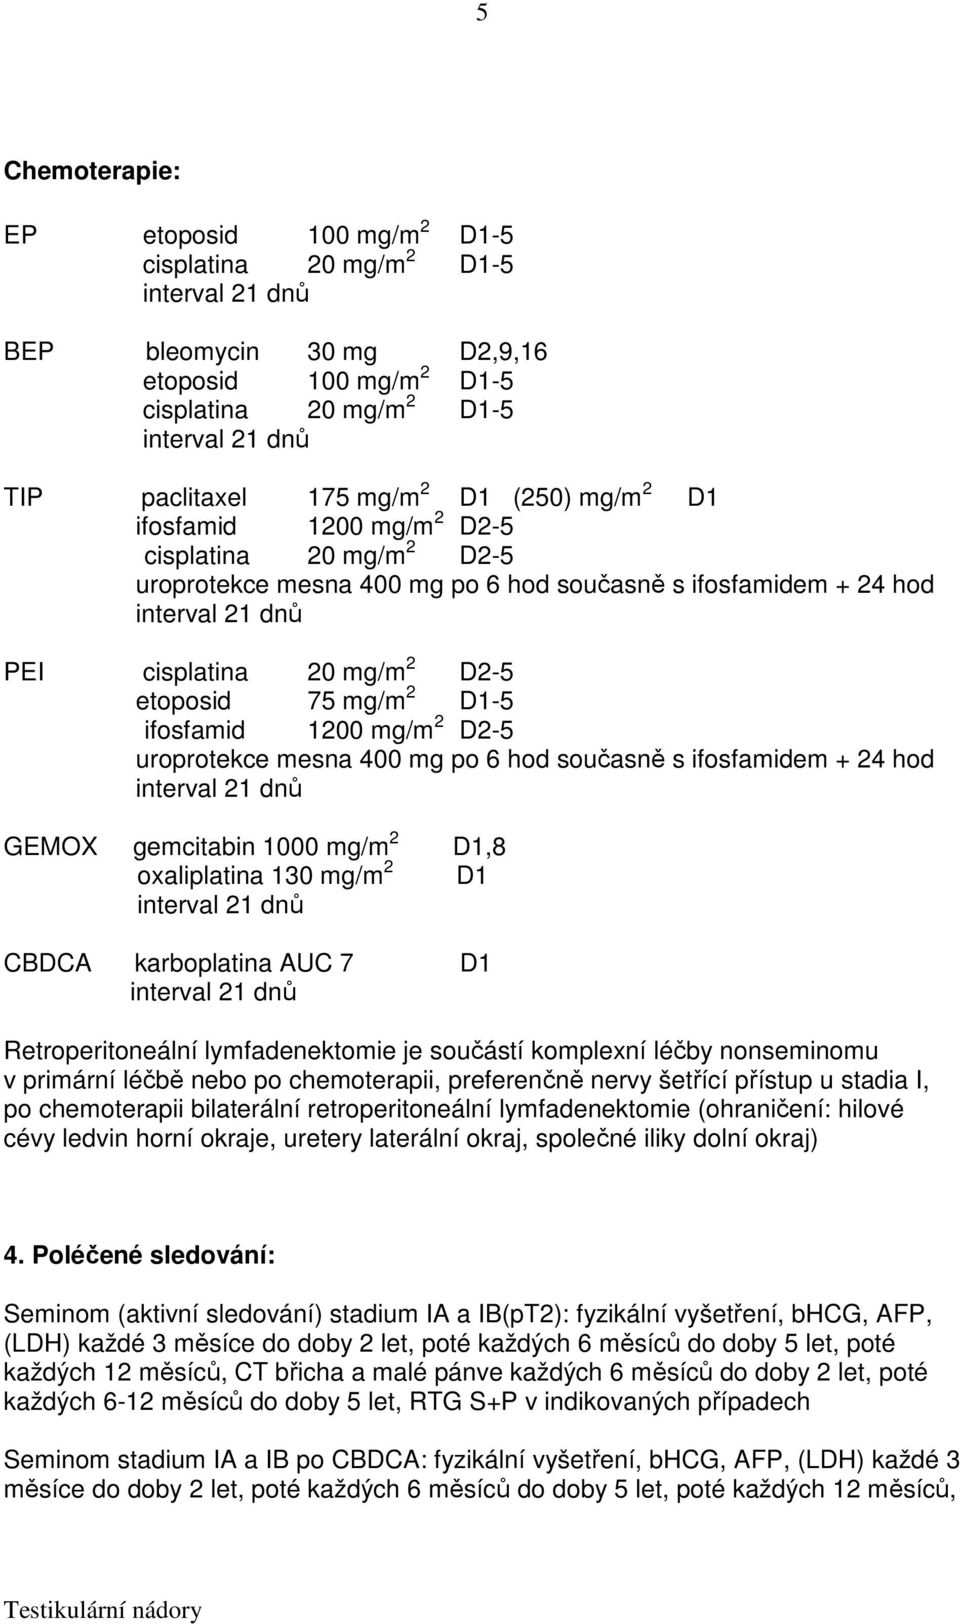 uroprotekce mesna 400 mg po 6 hod současně s ifosfamidem + 24 hod GEMOX gemcitabin 1000 mg/m 2 D1,8 oxaliplatina 130 mg/m 2 D1 CBDCA karboplatina AUC 7 D1 Retroperitoneální lymfadenektomie je